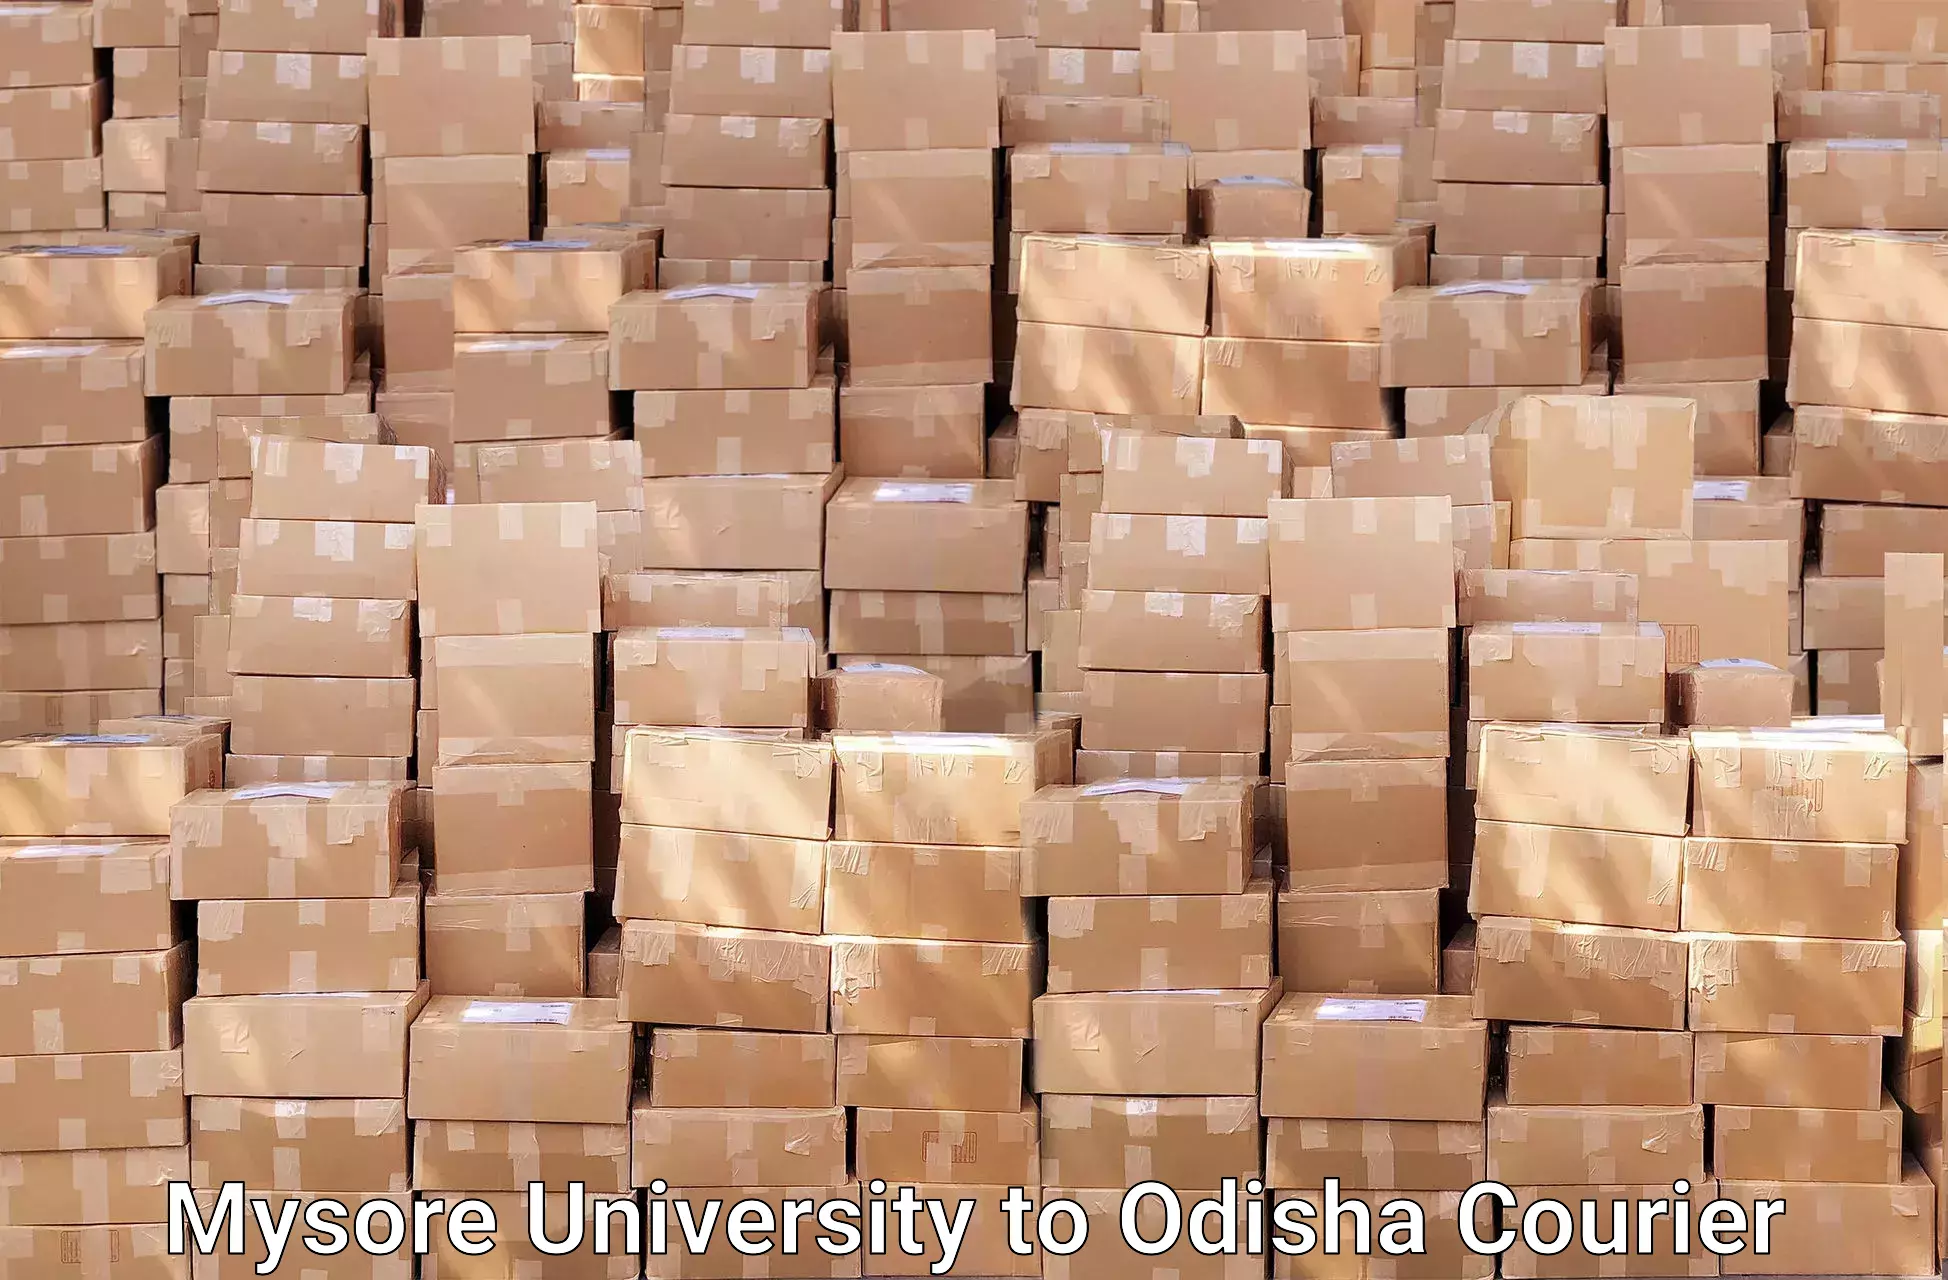 Quality moving company in Mysore University to Odisha